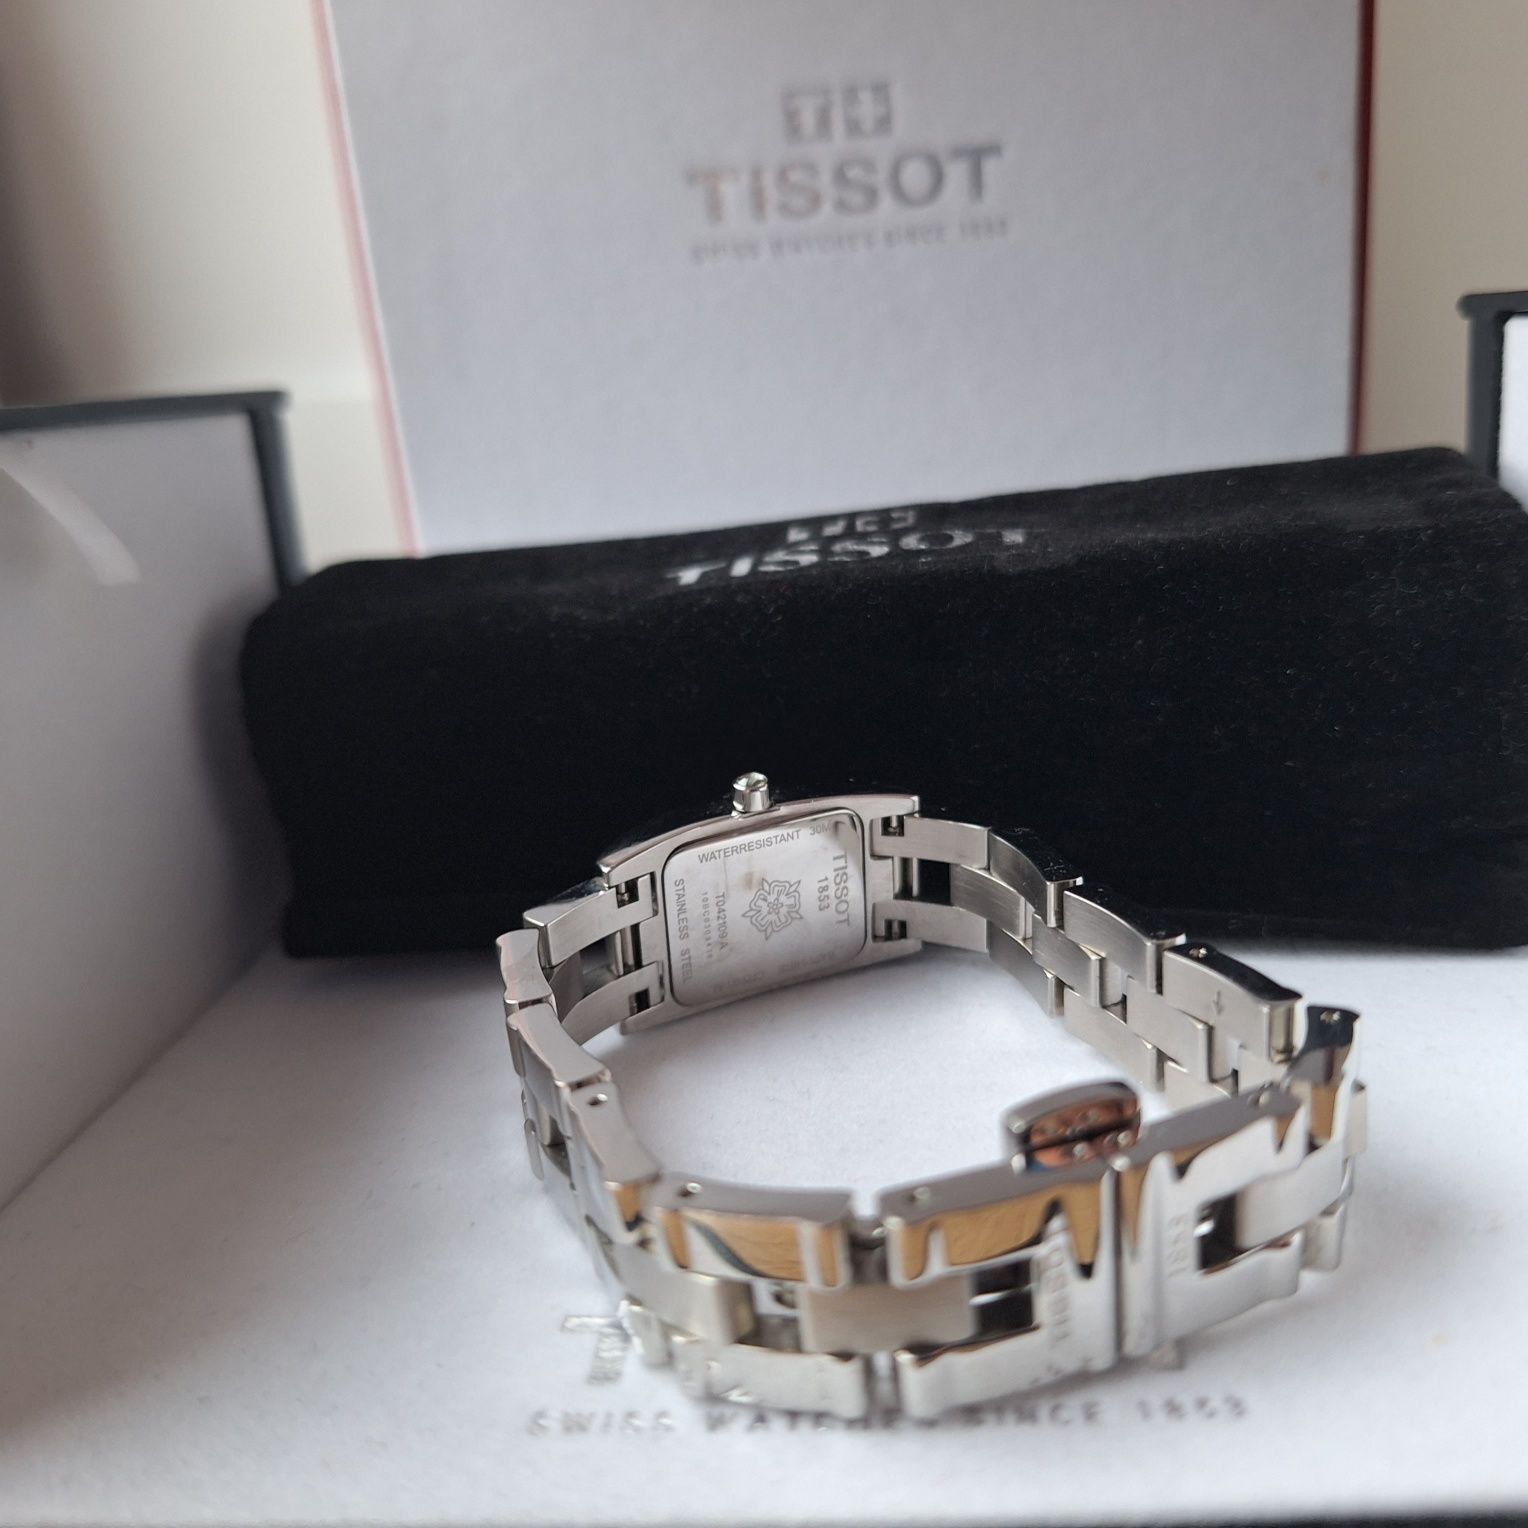 Zegarek Tissot damski jak nowy Unikat